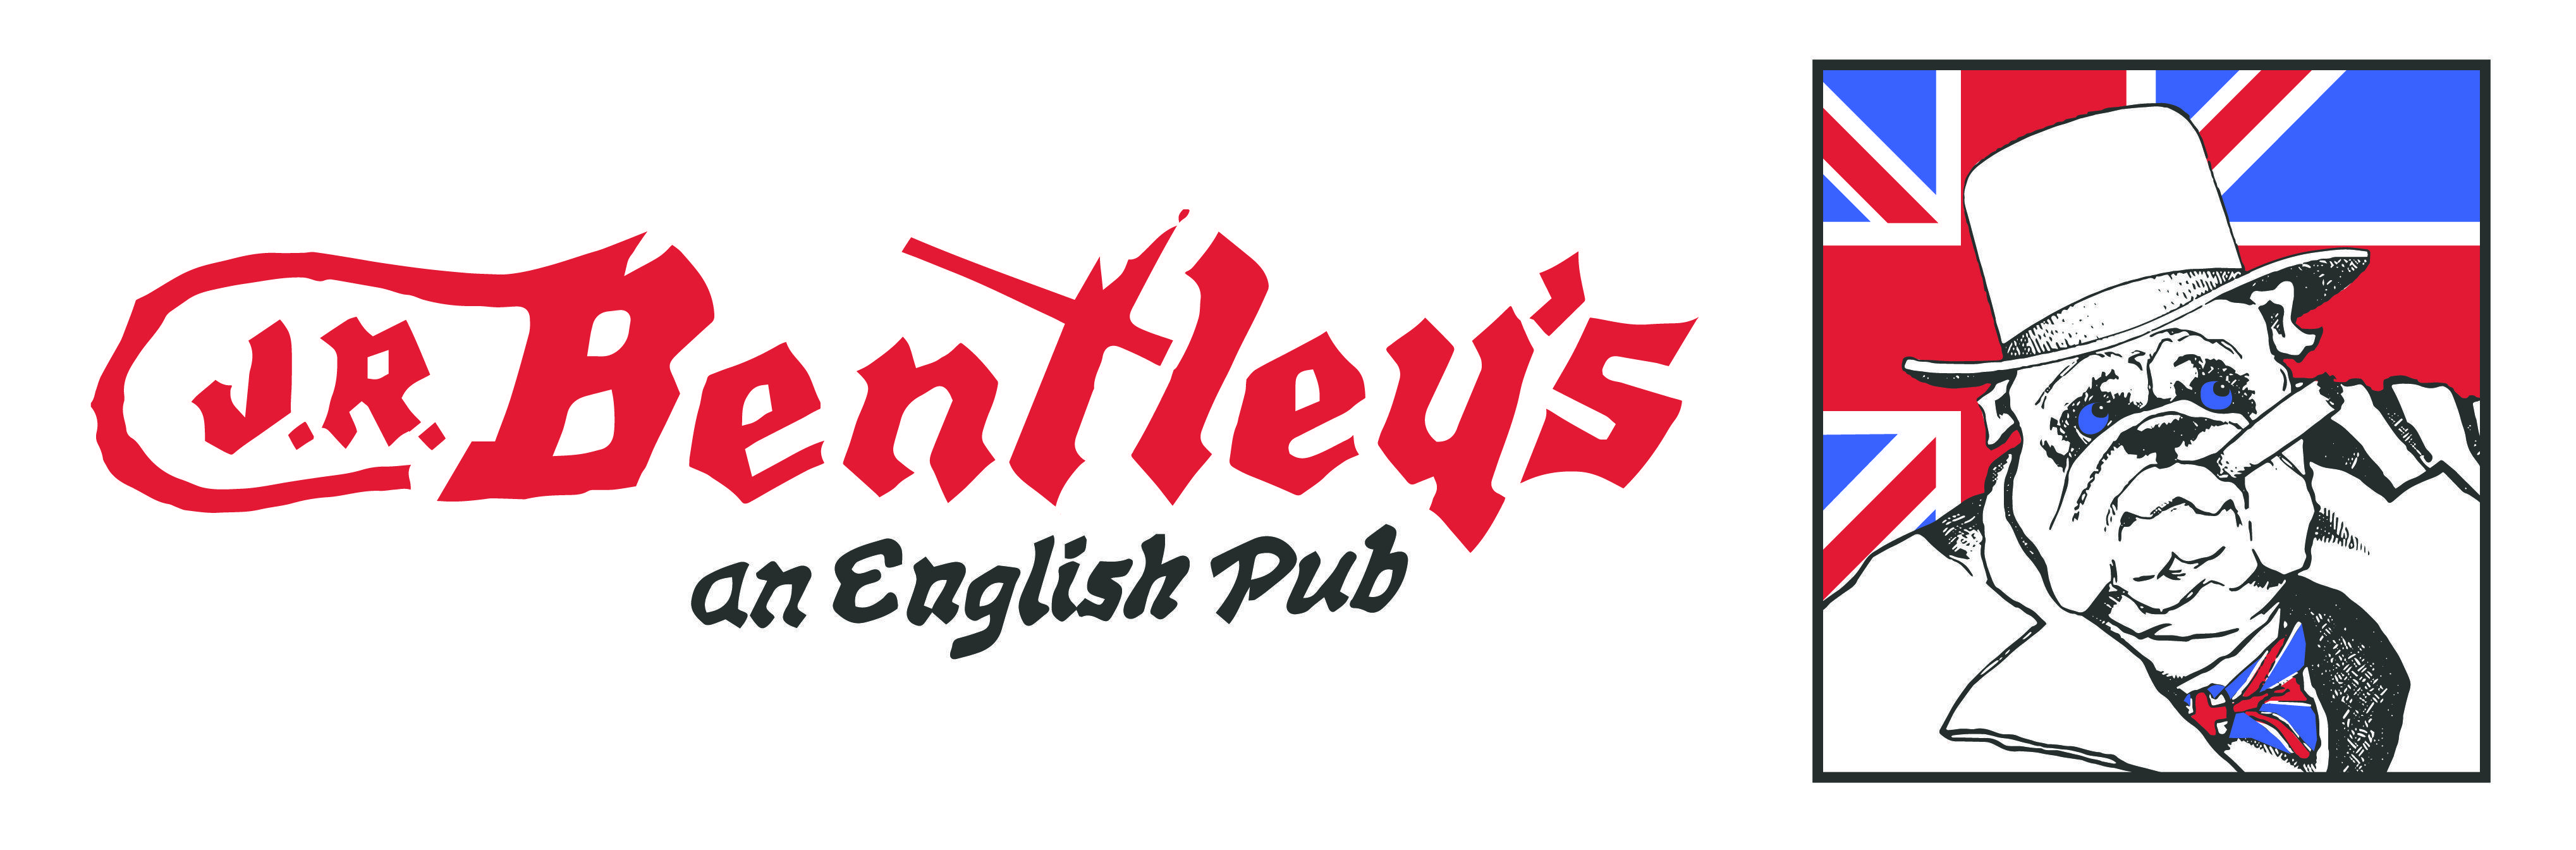 English Pub Logo - Restaurant & Pub in Arlington, TX. Best Burgers Near Me. R